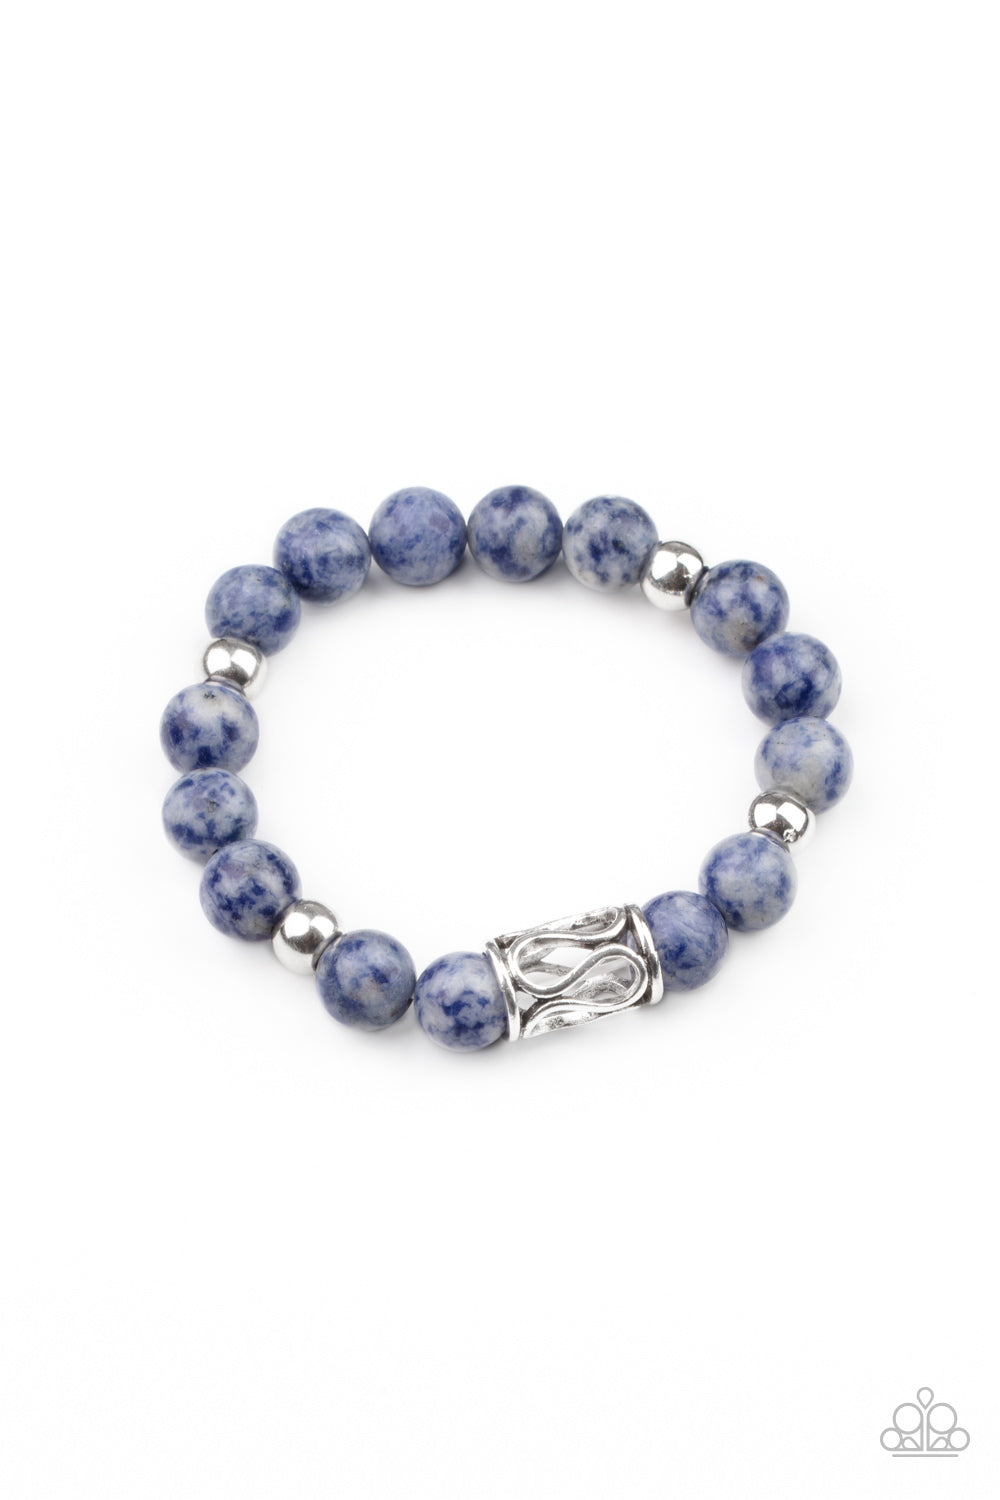 Soothes The Soul - Blue Bracelet freeshipping - JewLz4u Gemstone Gallery